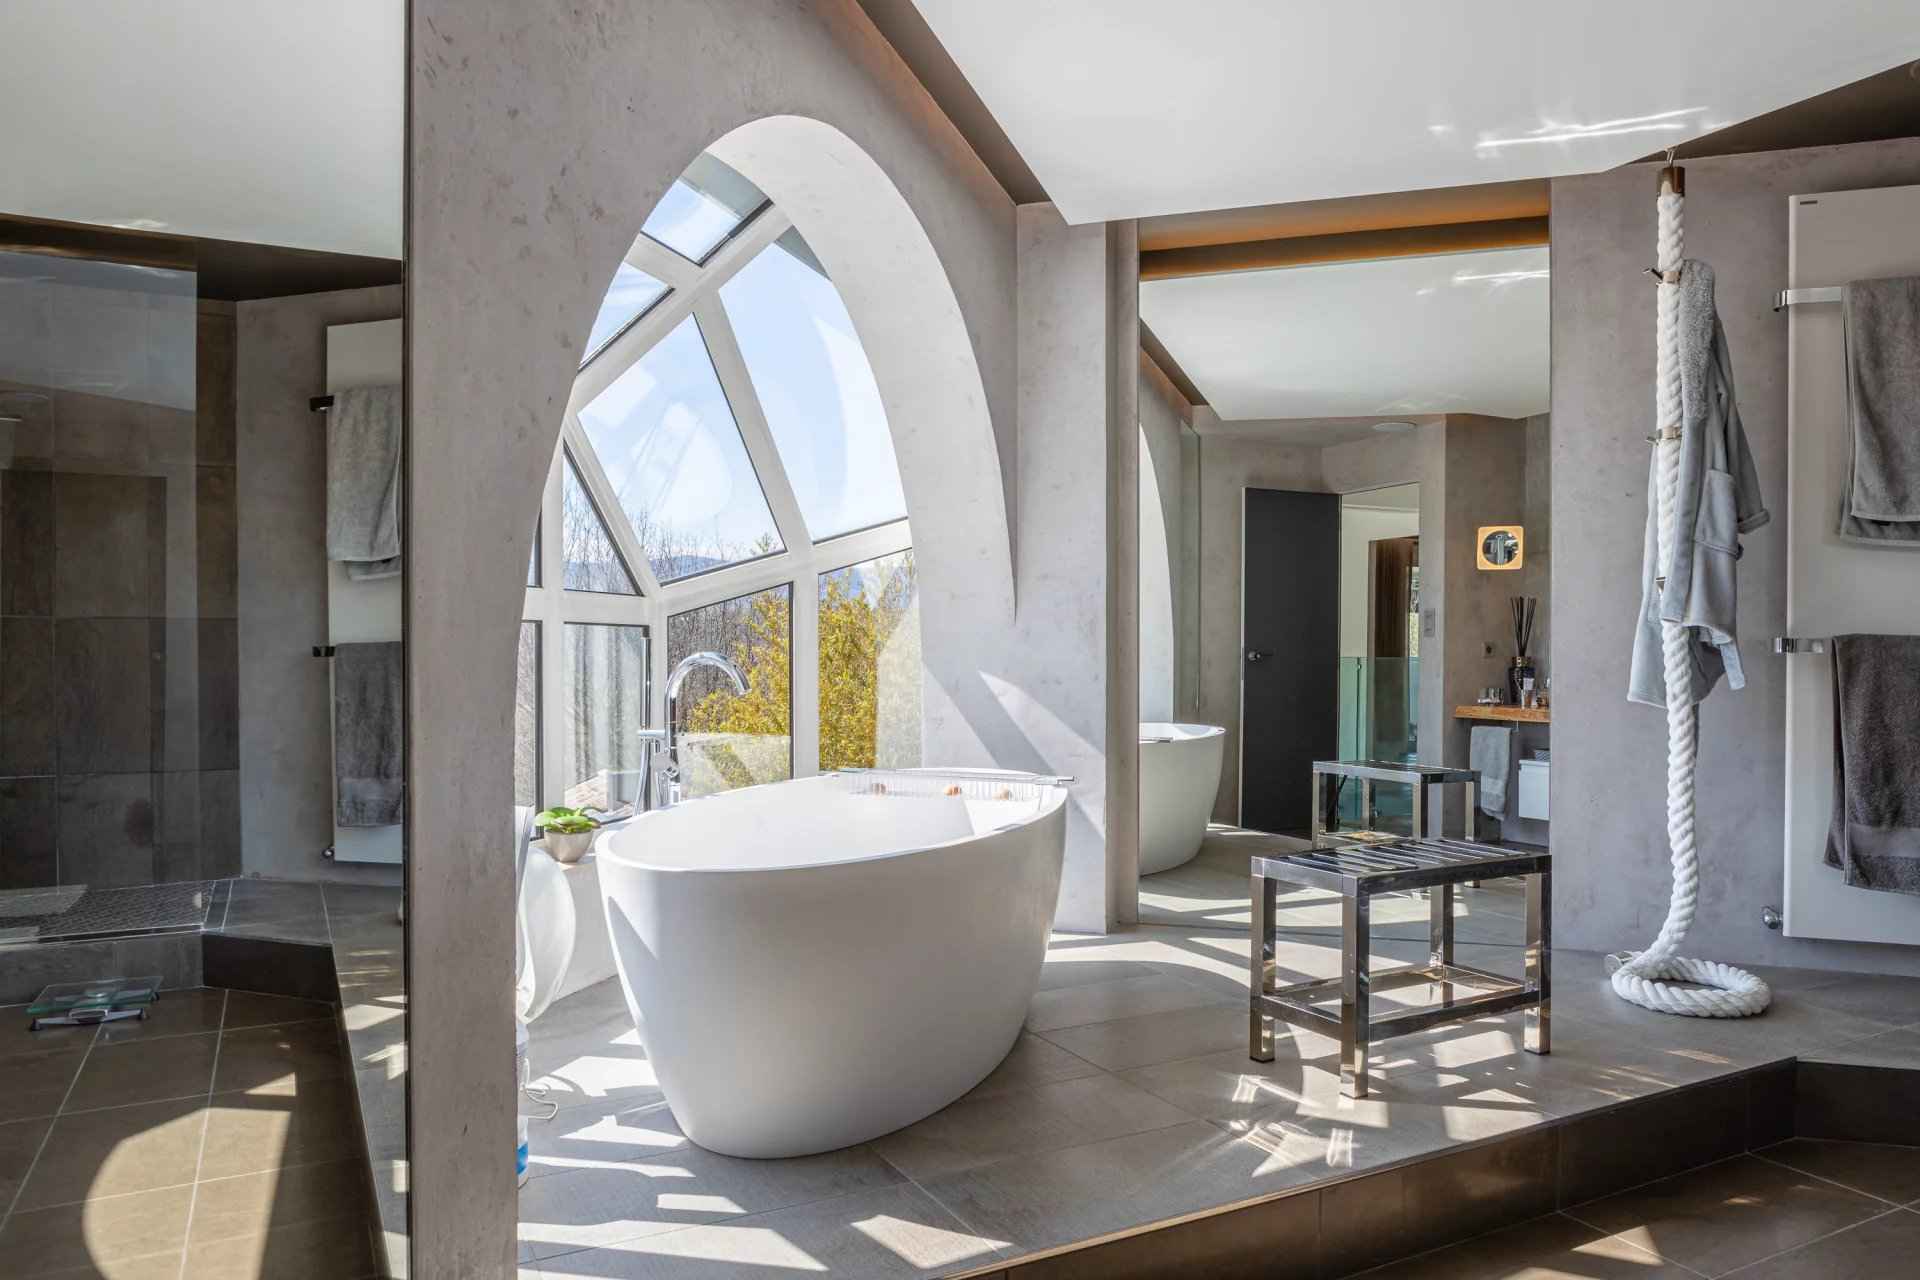 Barnes Lyon, prestigious real estate agency - Bathroom of a house in Brindas